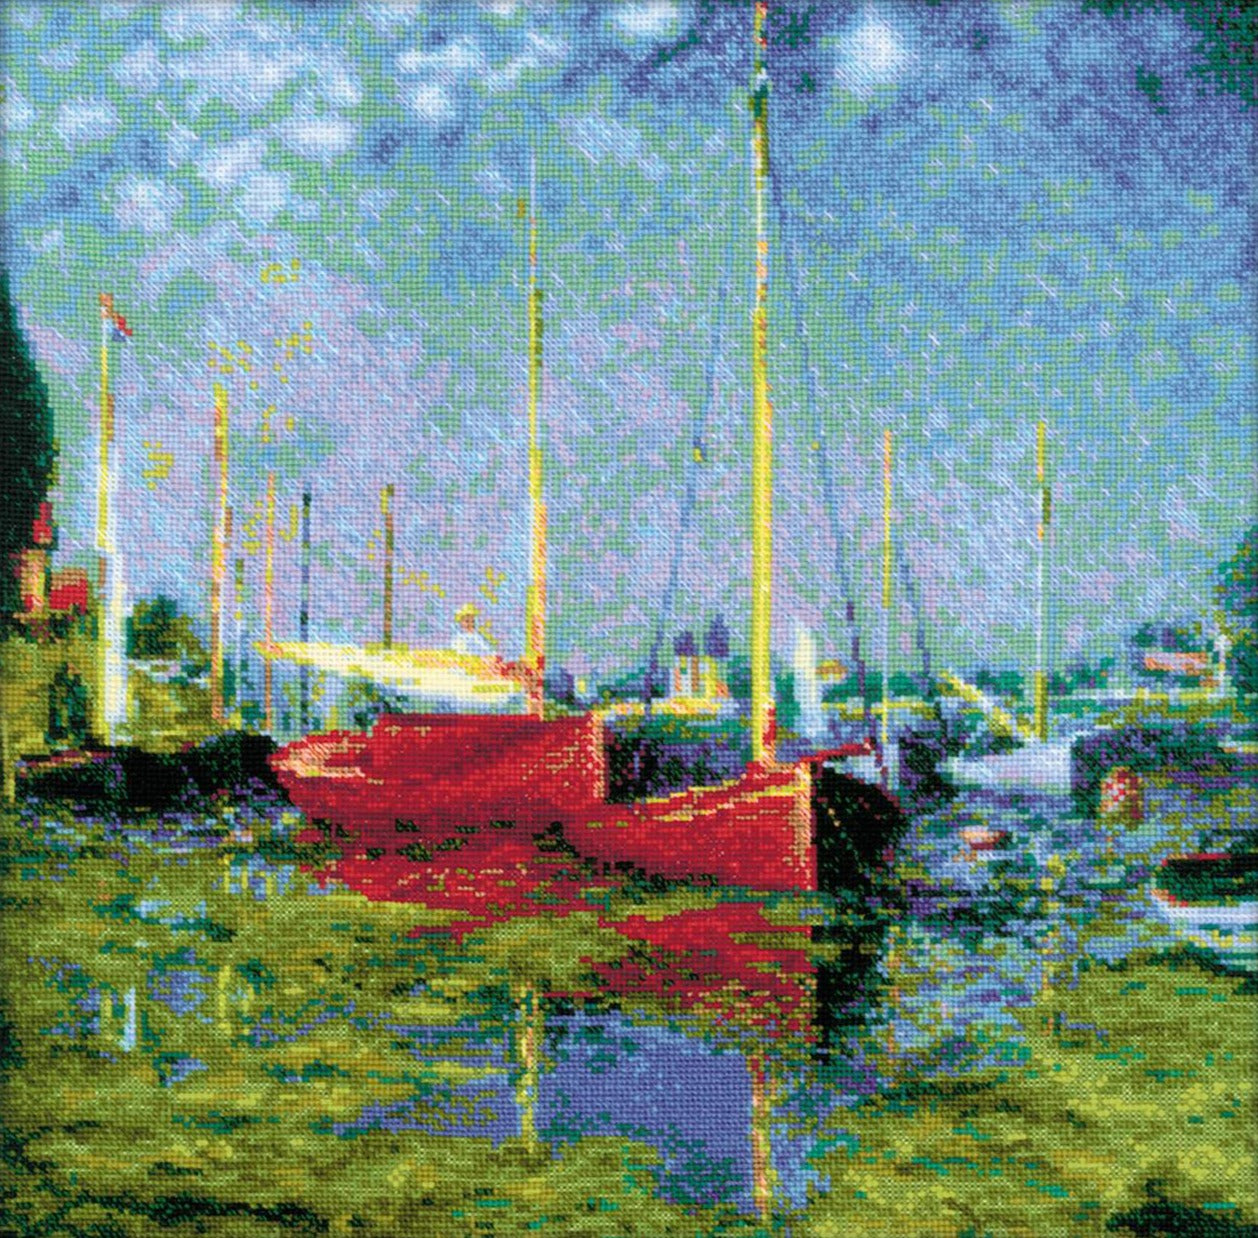 רקמה על בד גבינה - Argenteuil after C. Monet's Painting